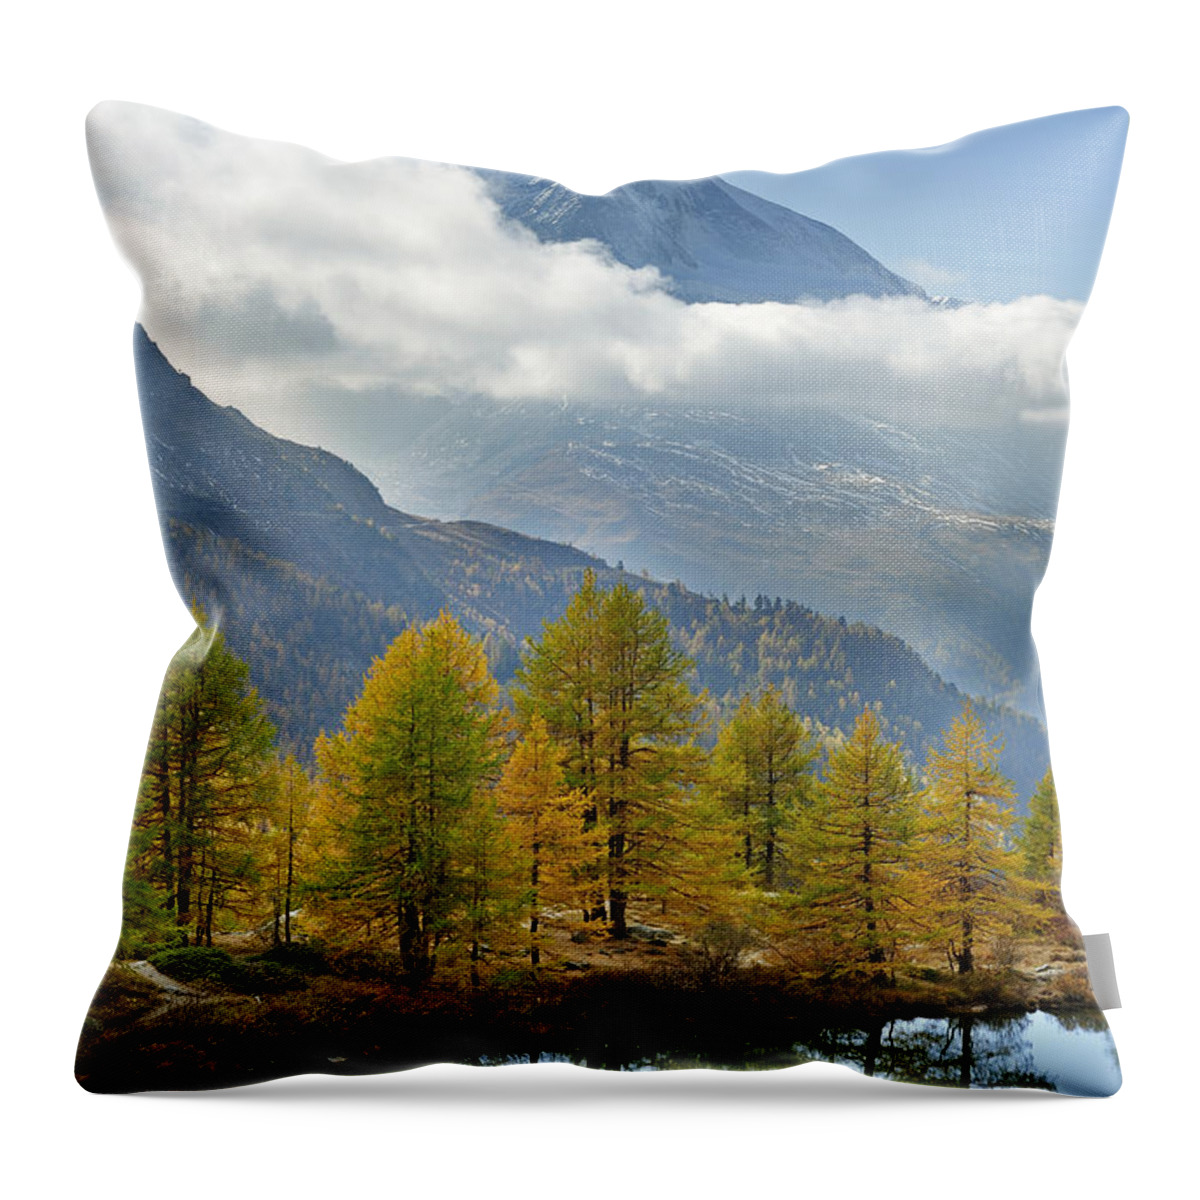 525231 Throw Pillow featuring the photograph The Matterhorn Switzerland by Thomas Marent